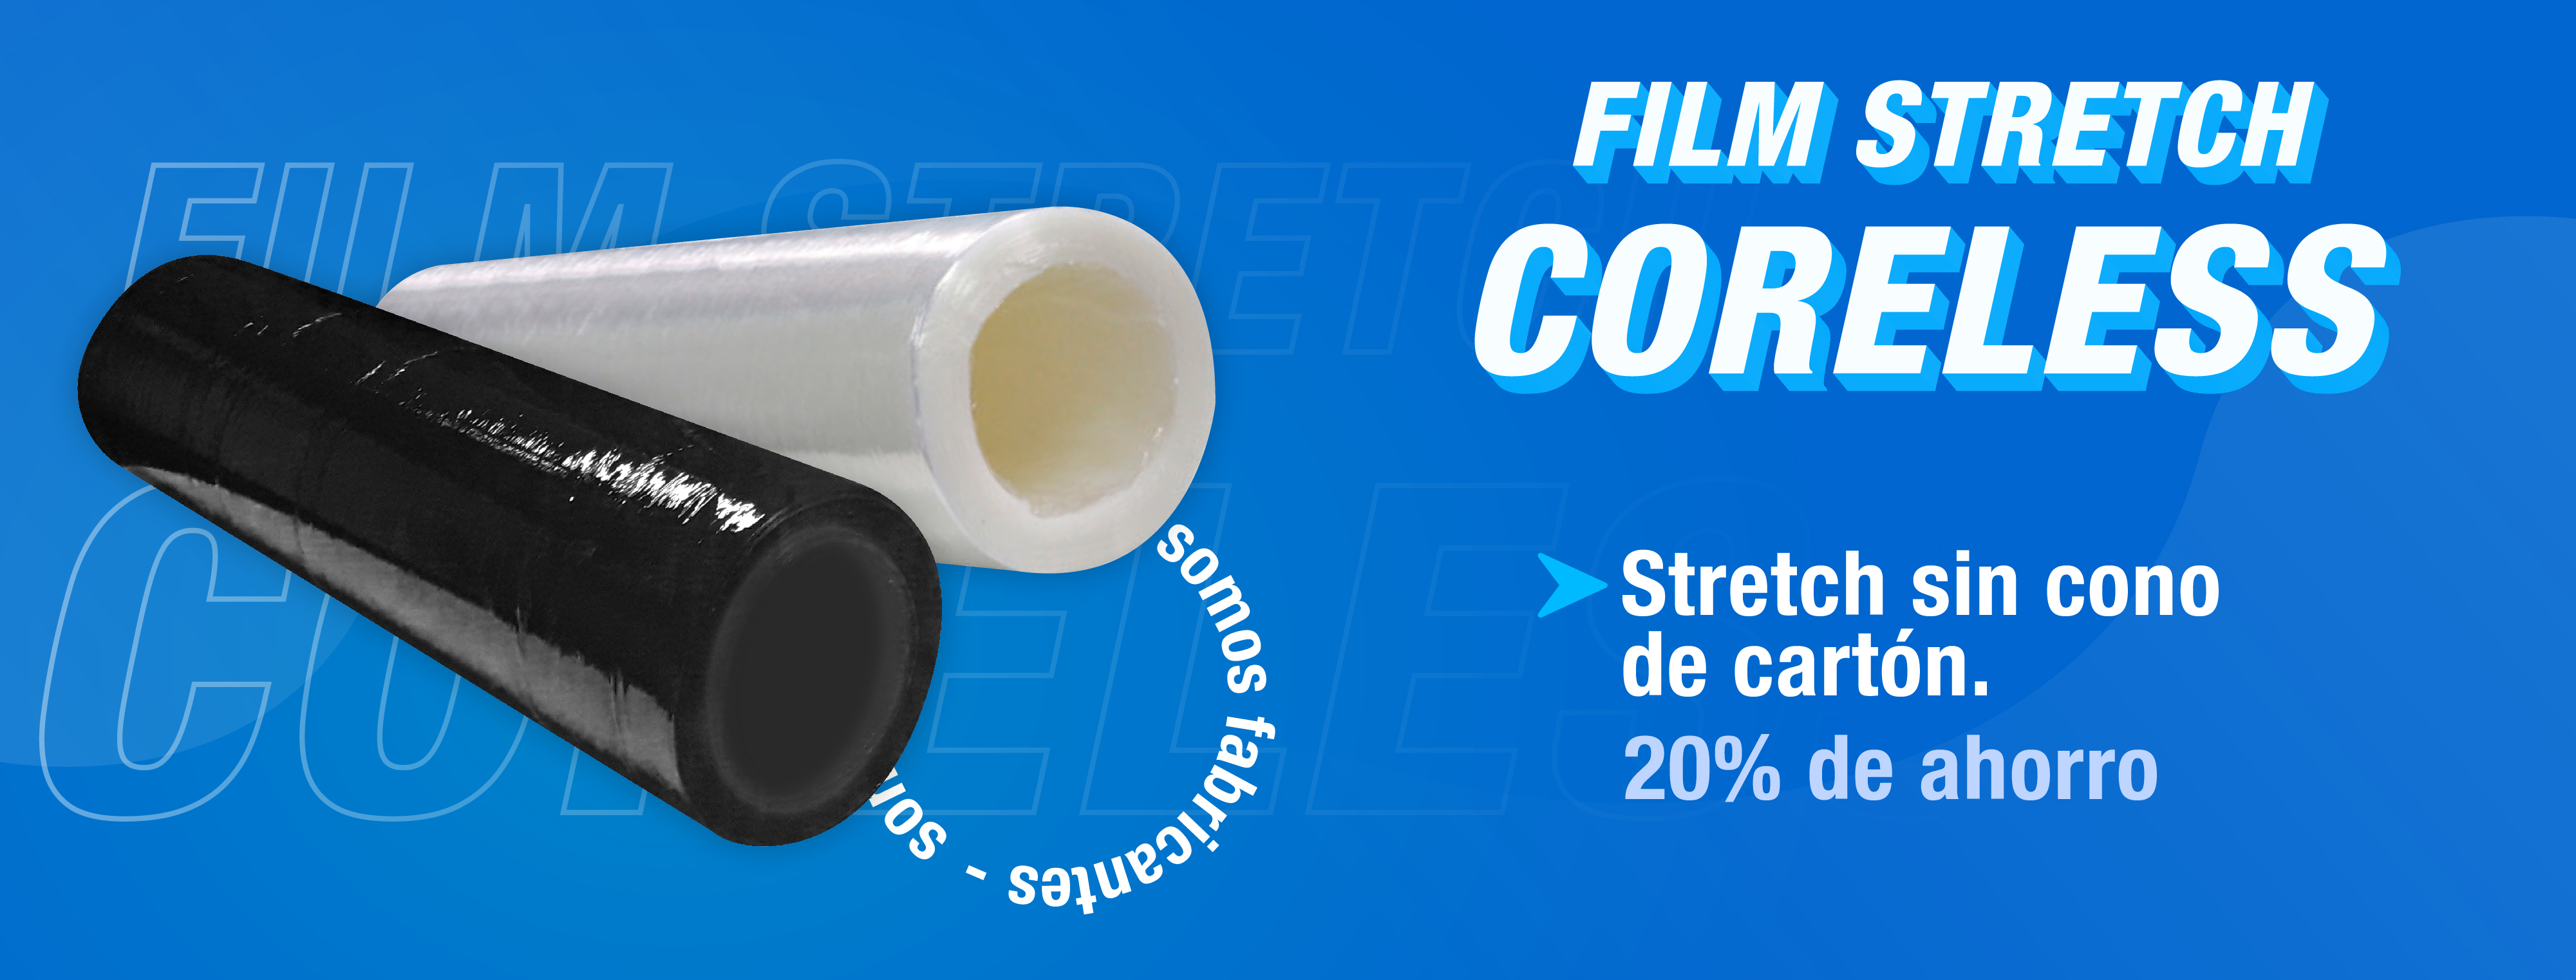 Film Stretch Coreless